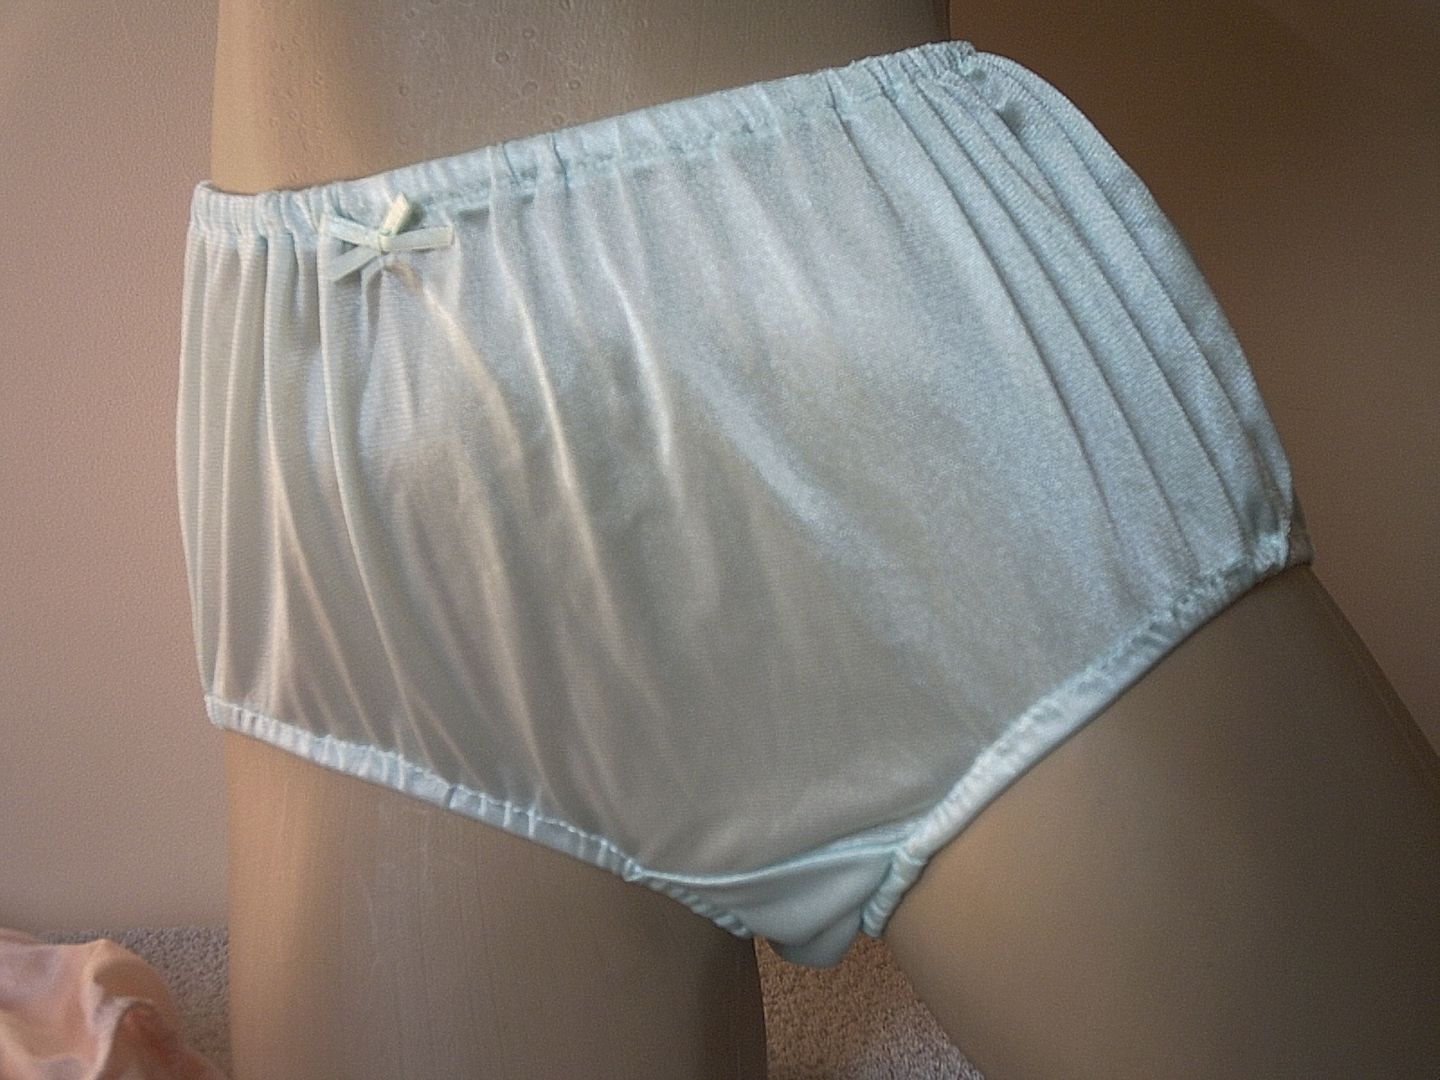 Nylon panties full brief